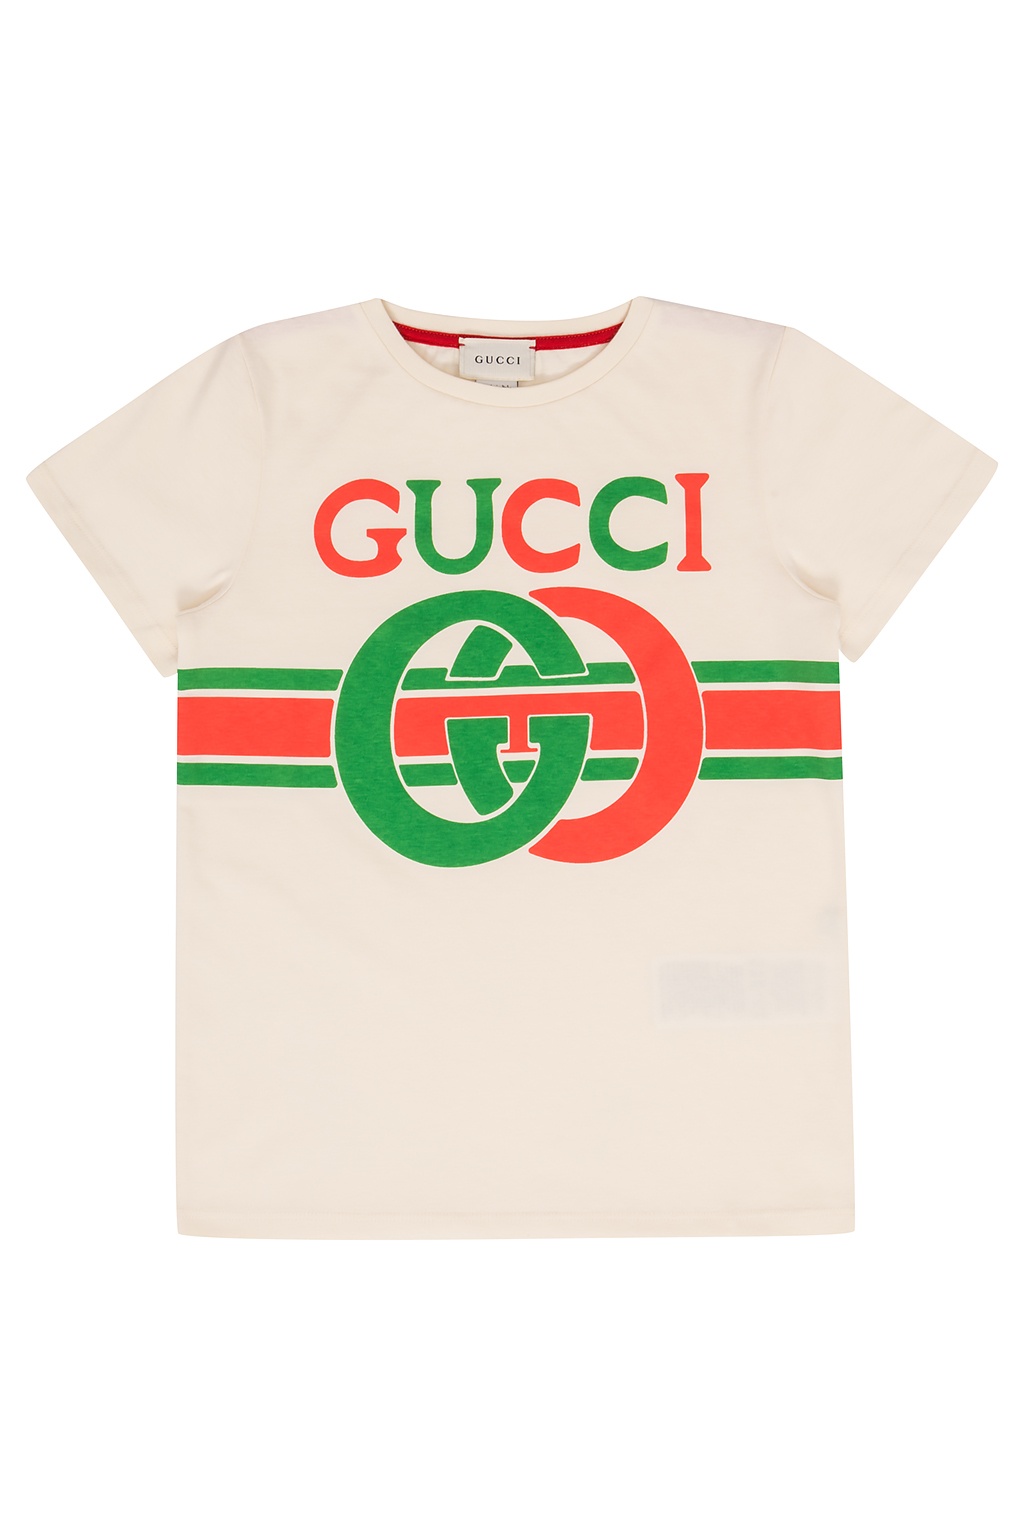 gucci child t shirt